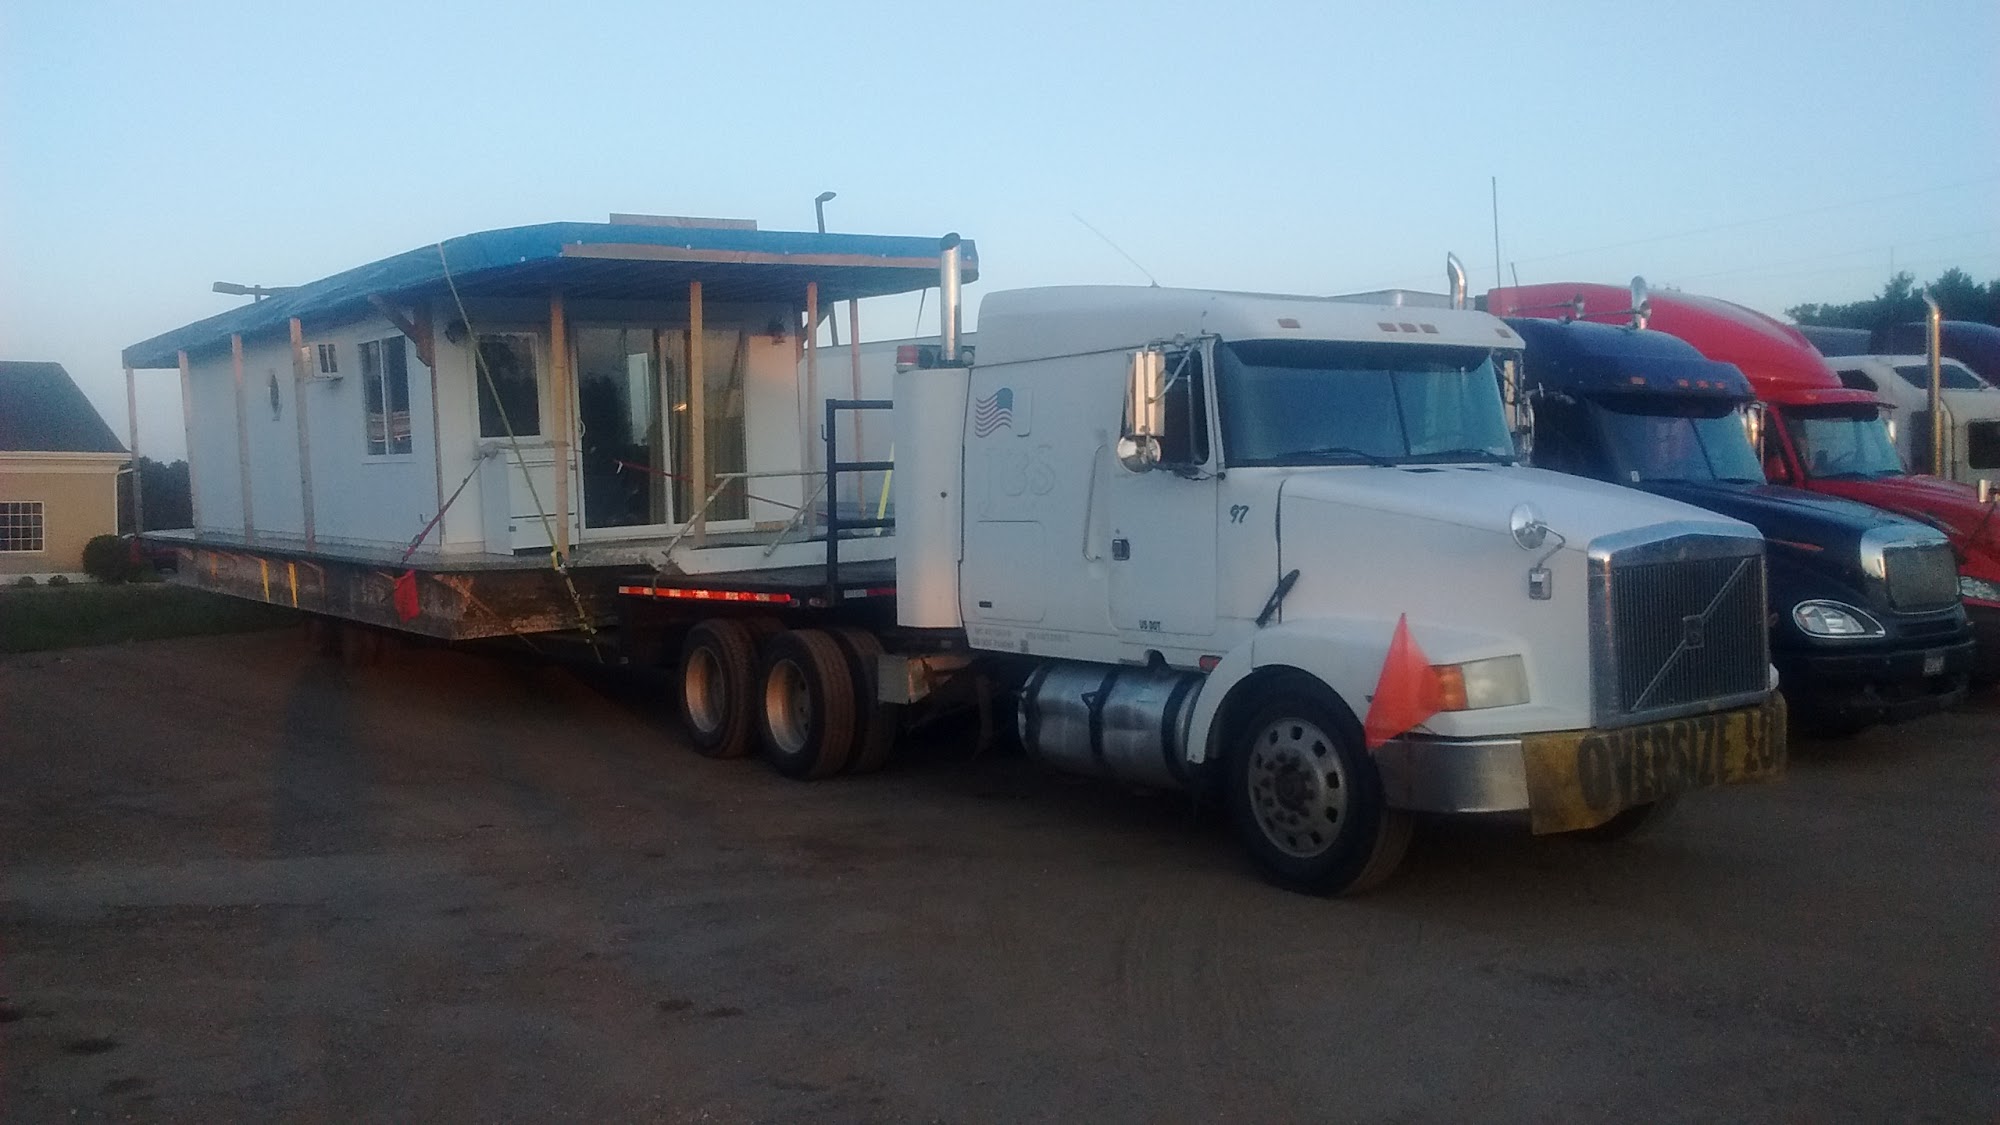 Richard Johnson Trucking E1398 Will Kumlin Rd, De Soto Wisconsin 54624